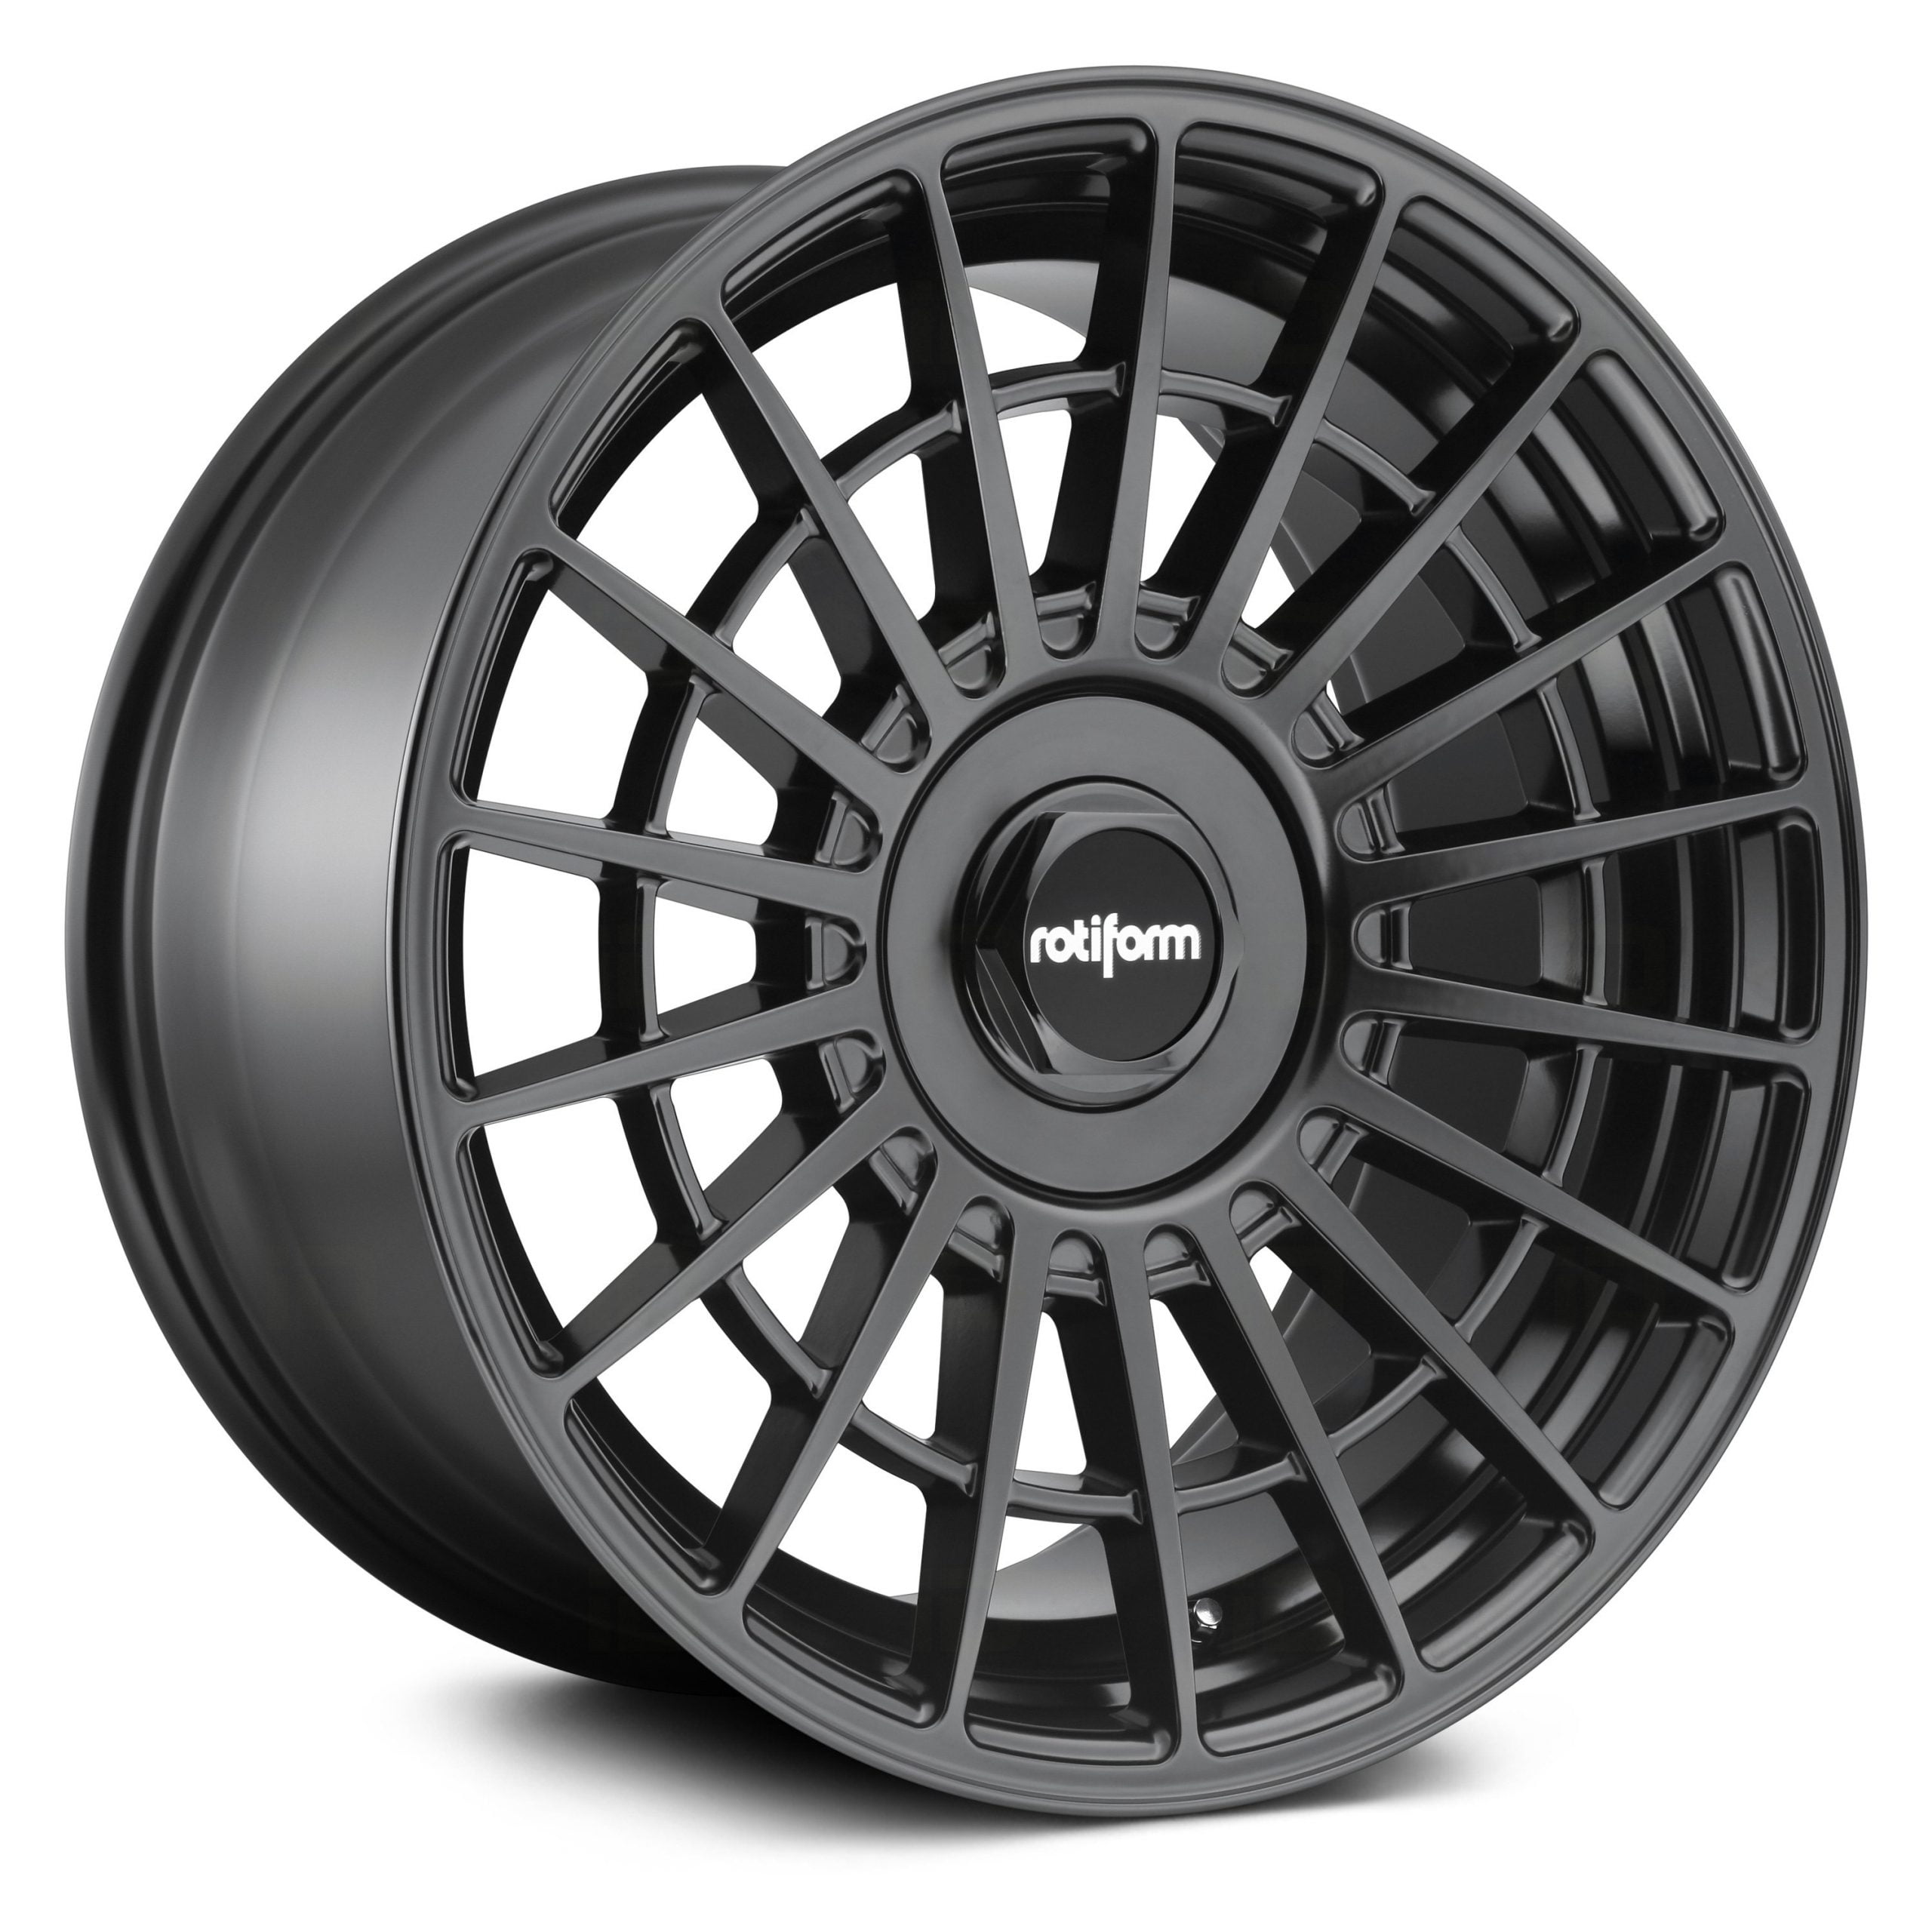 Rotiform Wheels - Wheel Pros Australia | Leading Distributor of Branded Aftermarket Wheels